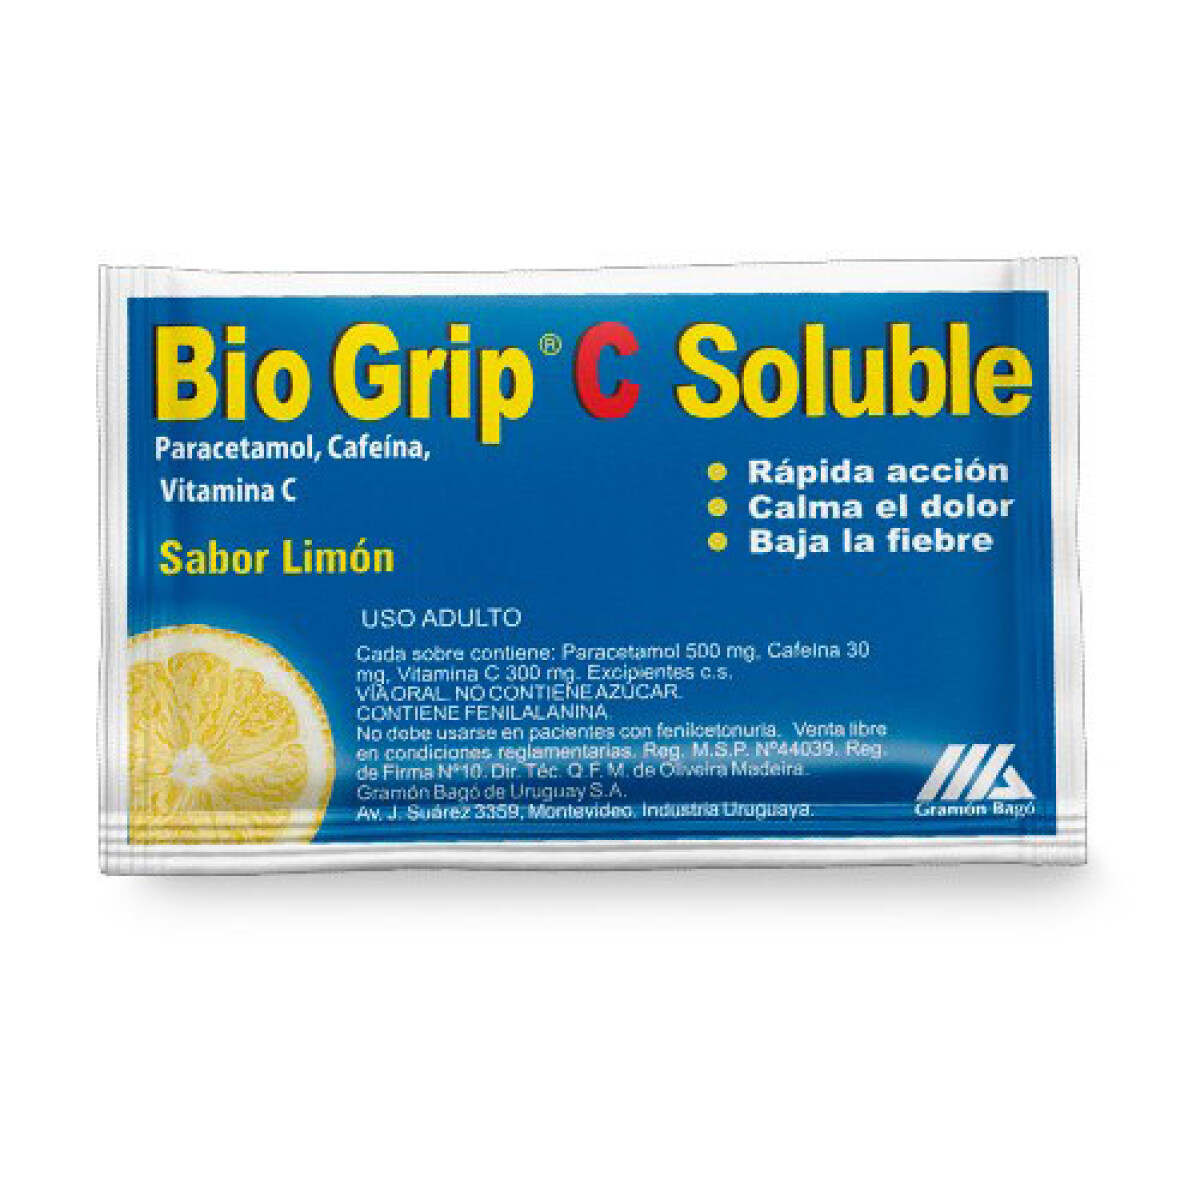 Bio Grip C Soluble x 1 SOB 